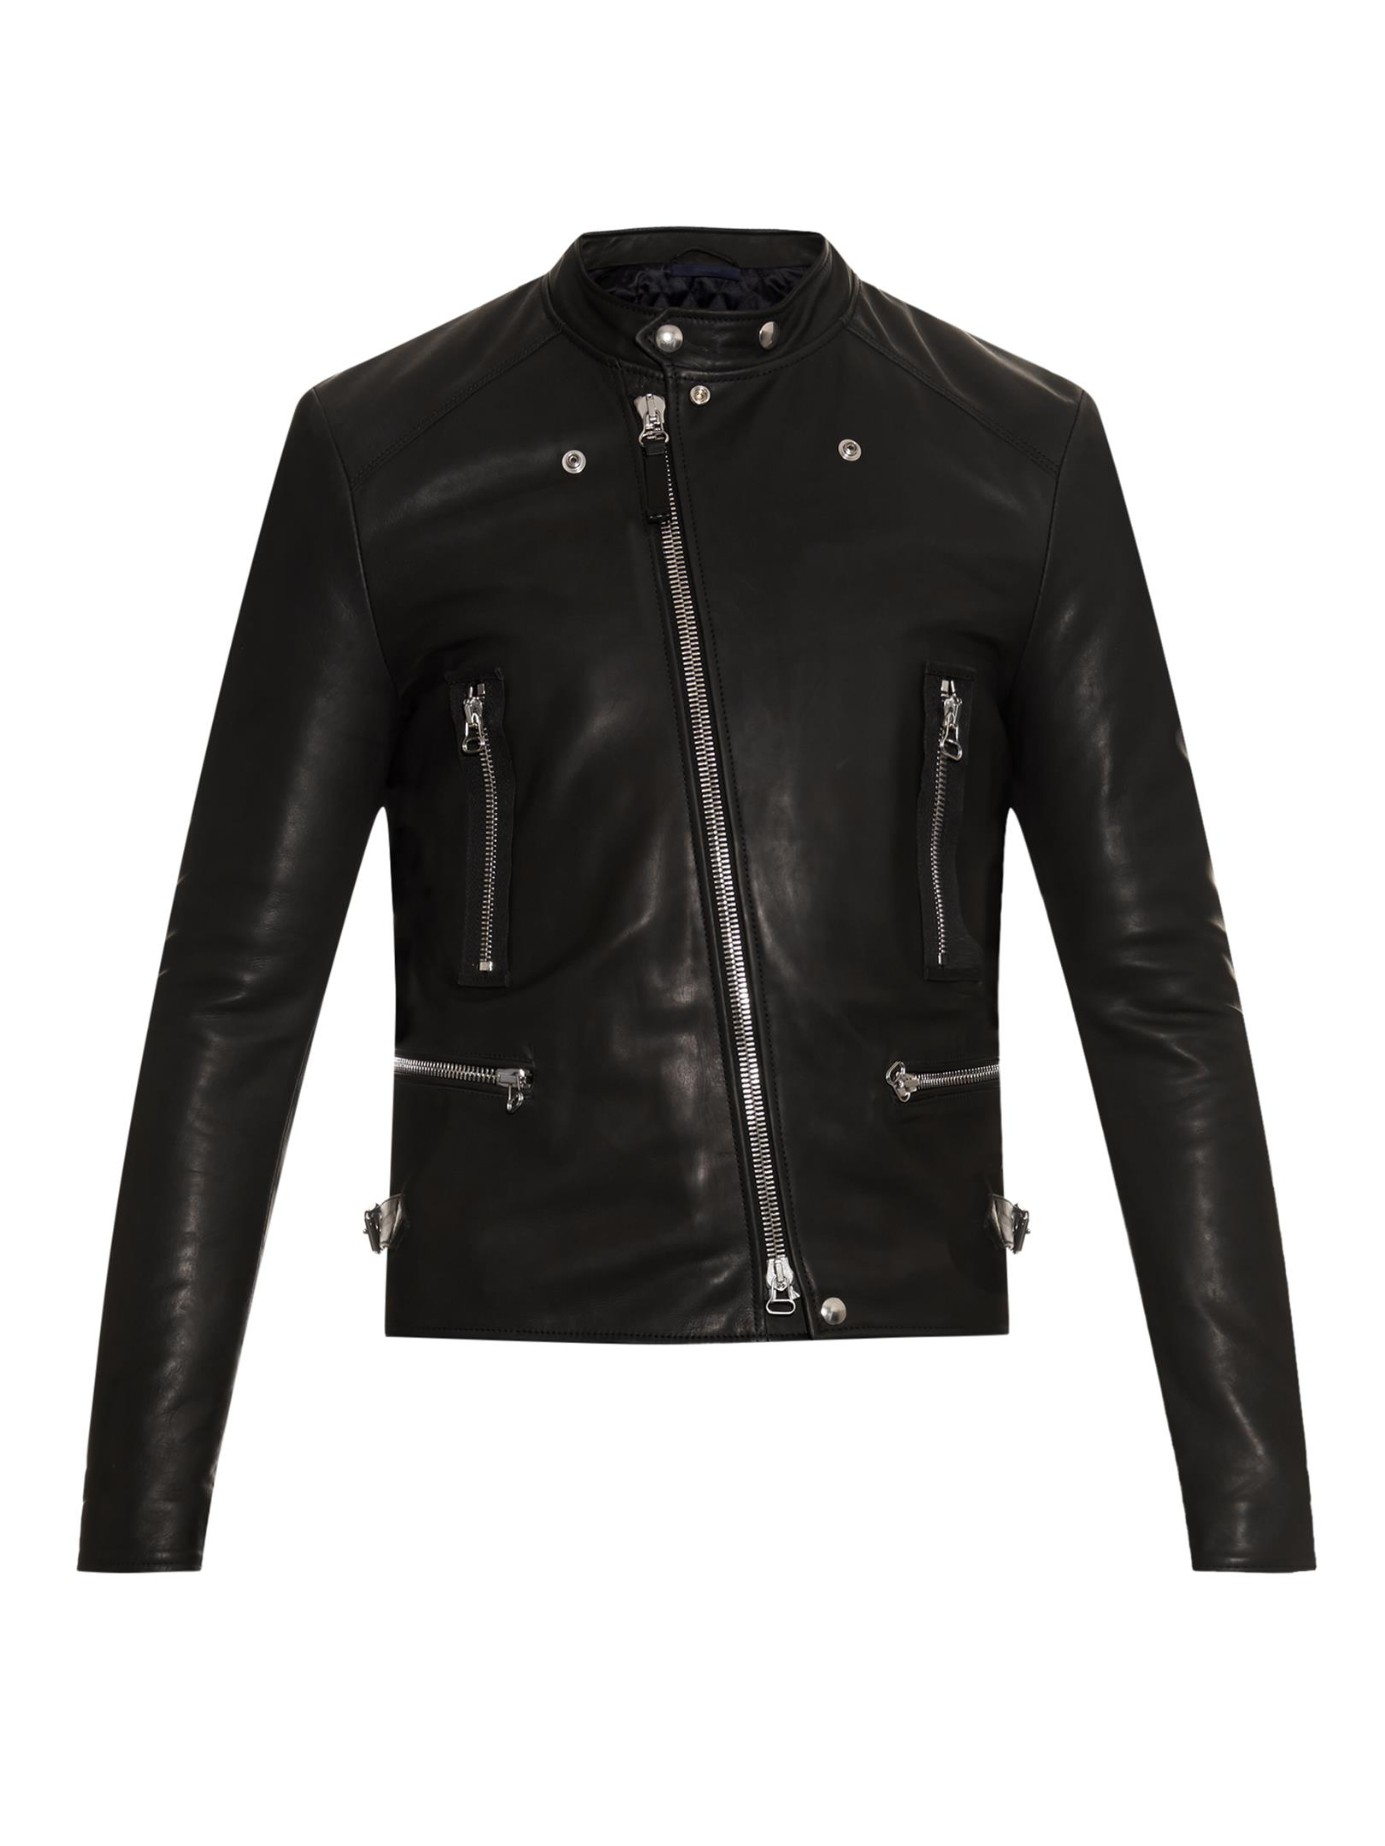 Lyst - Lanvin Leather Biker Jacket in Black for Men